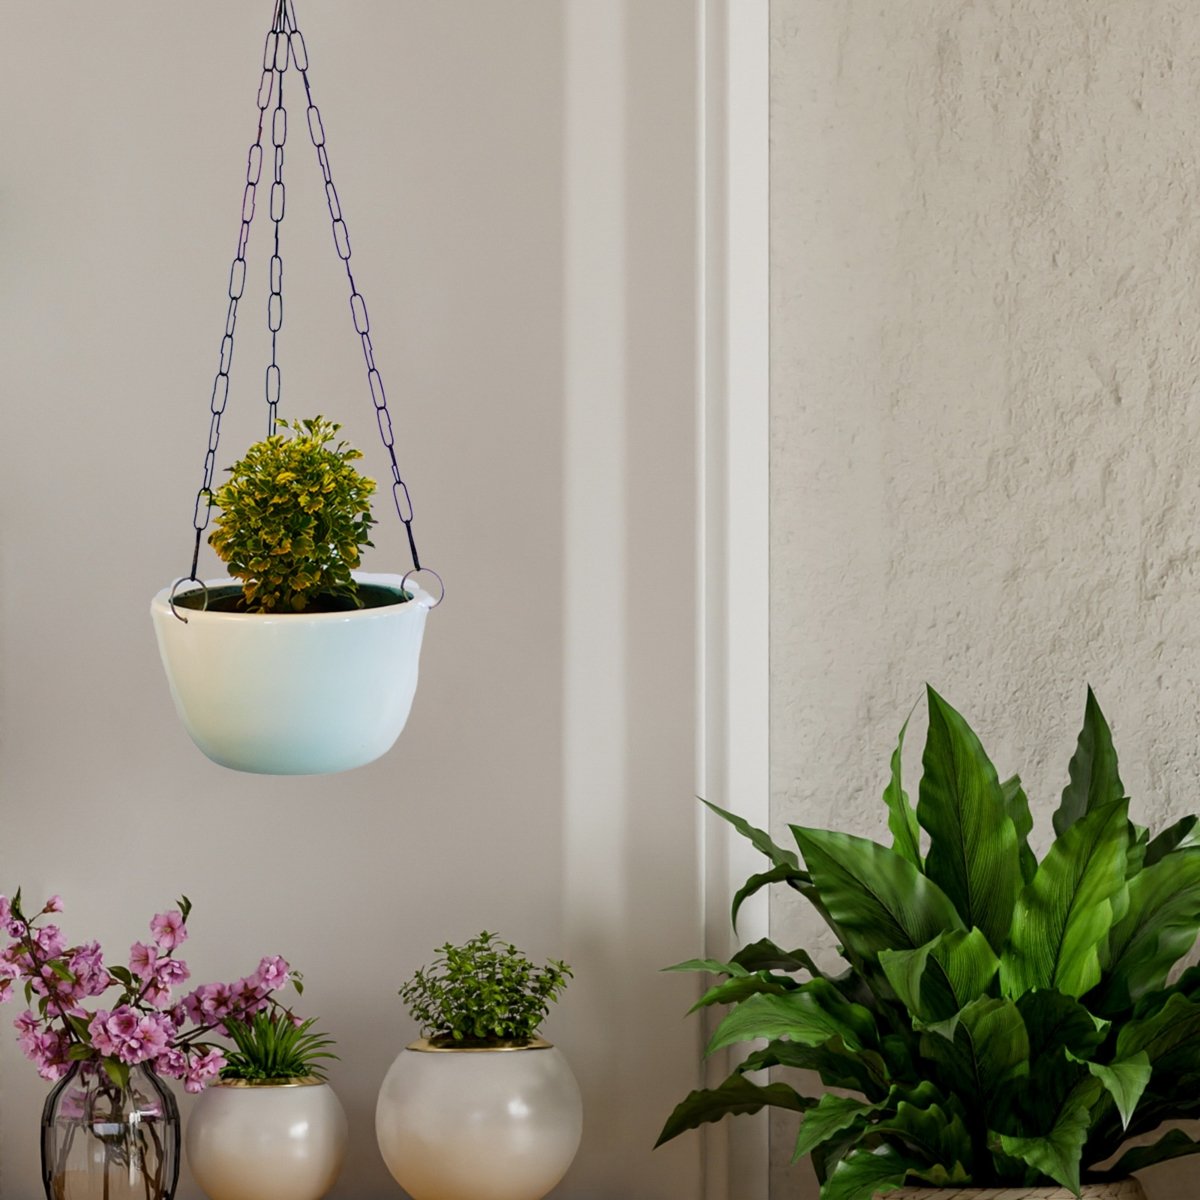 Kezevel Indoor Outdoor FRP Planters - White Hanging Flower Pot, Lightweight Durable Glossy Hanging Planter Garden Home Décor